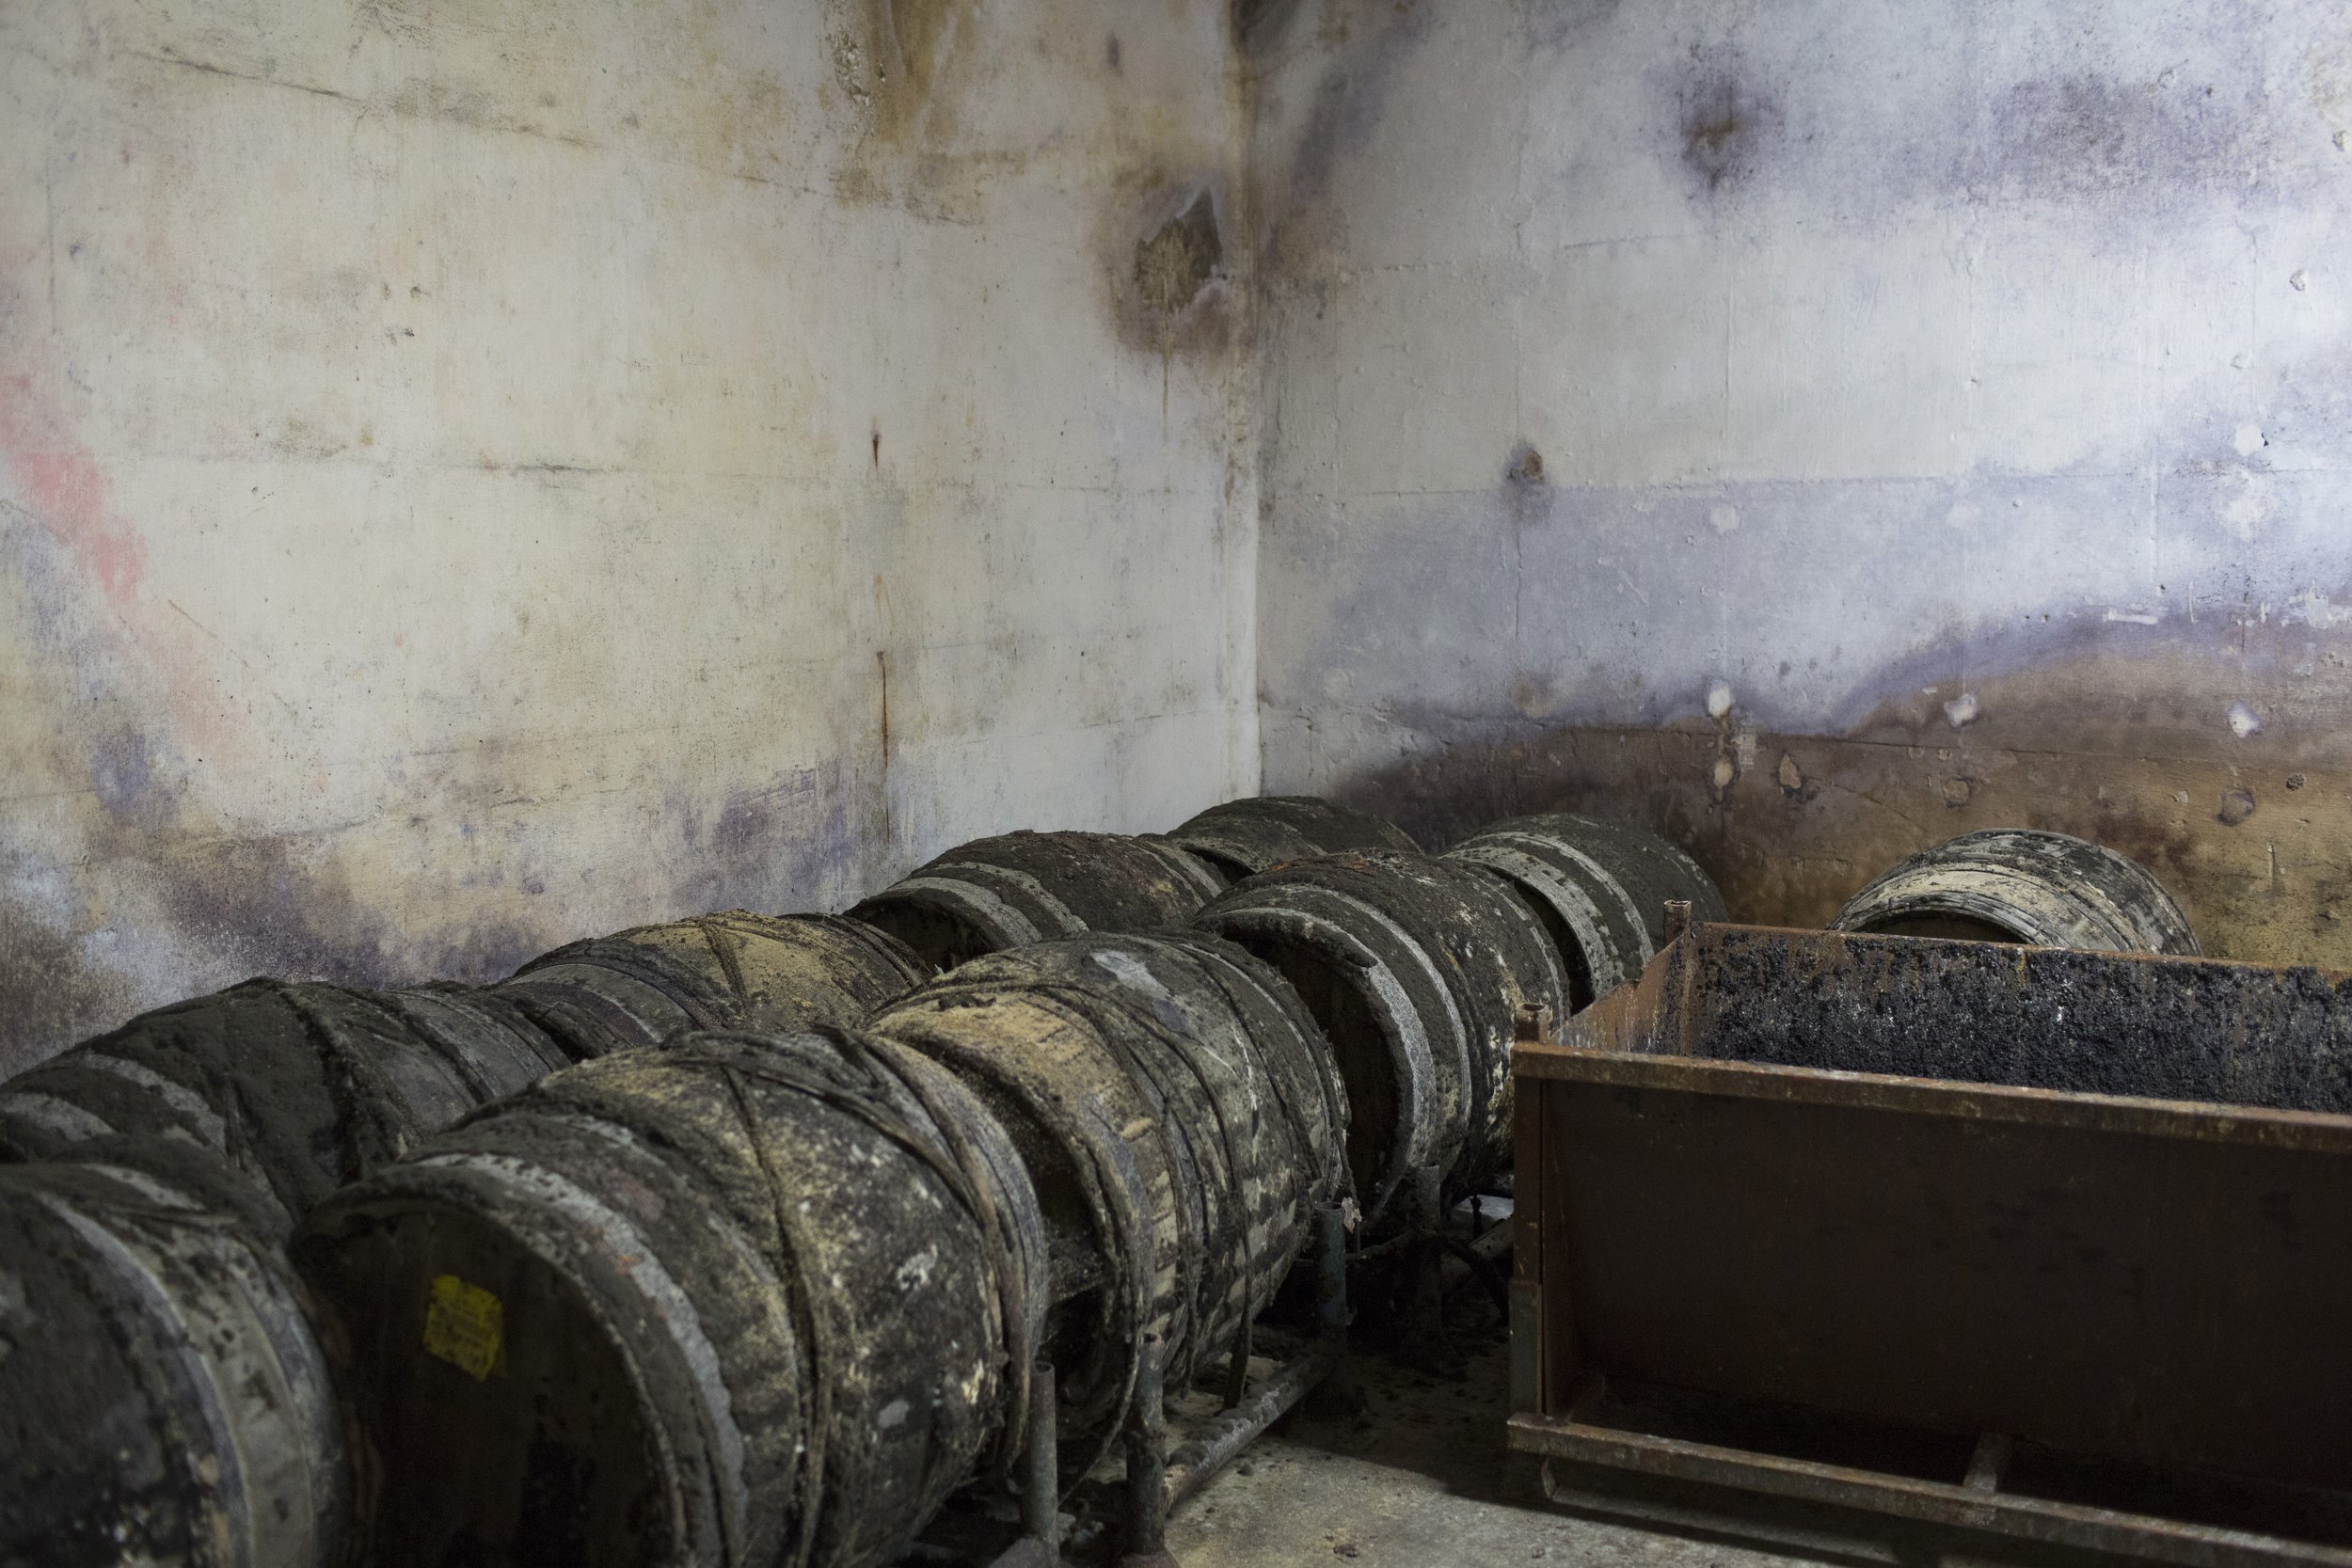   Wine casks inside the vault of Corsham Cellars.   